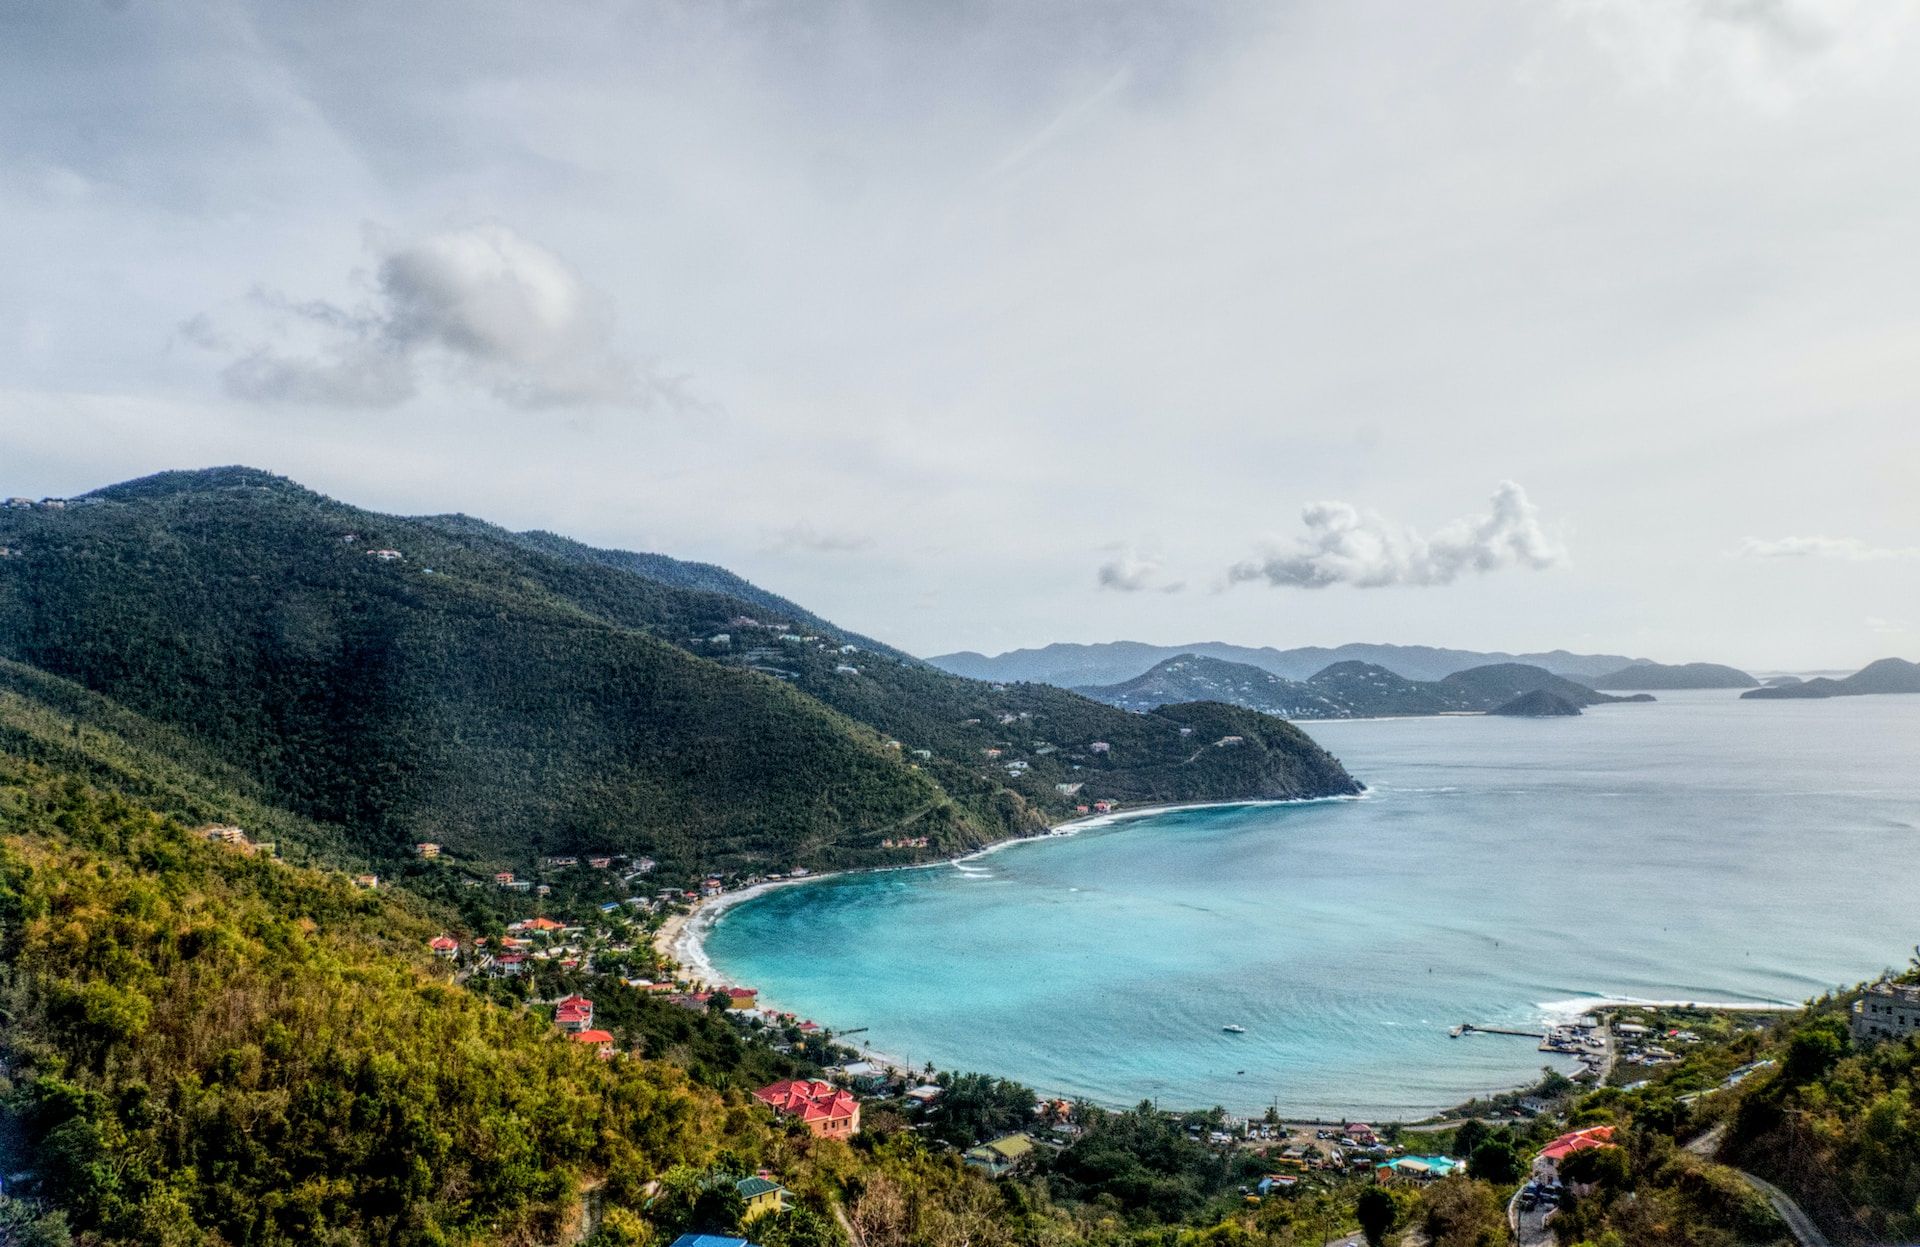 Pictures of Cane Garden Bay Tortola, British Virgin Islands